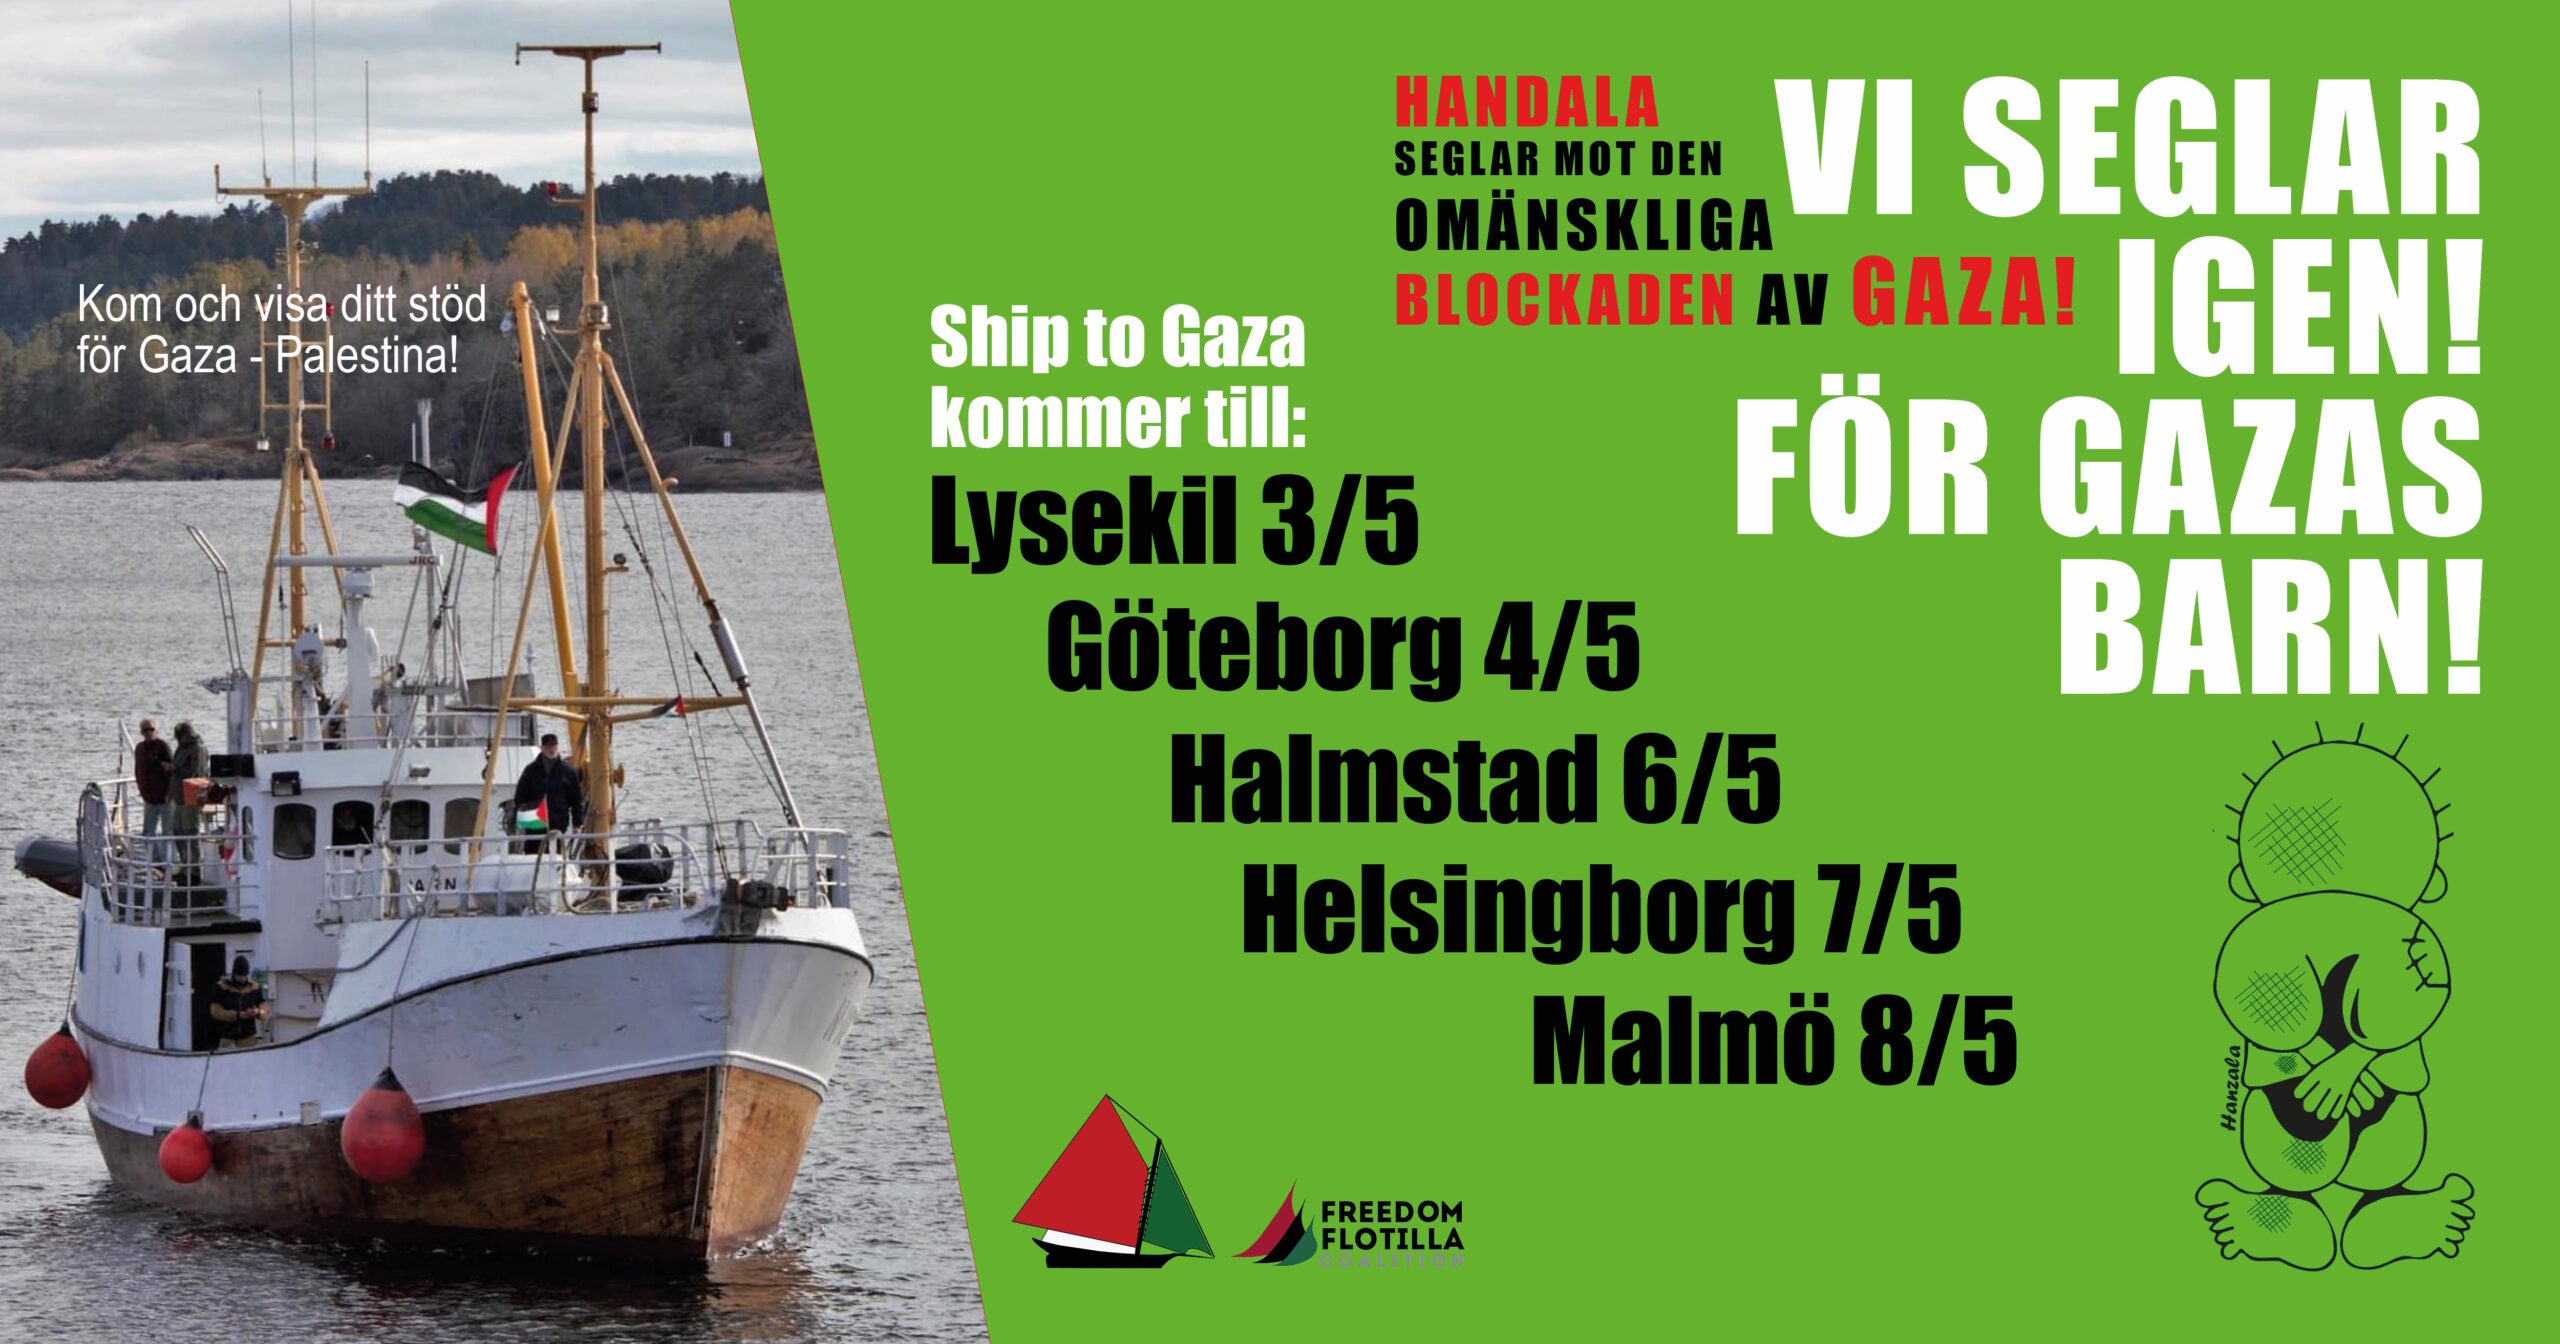 Ship to Gaza Sverige seglar igen! Besöker fem hamnar i Sverige